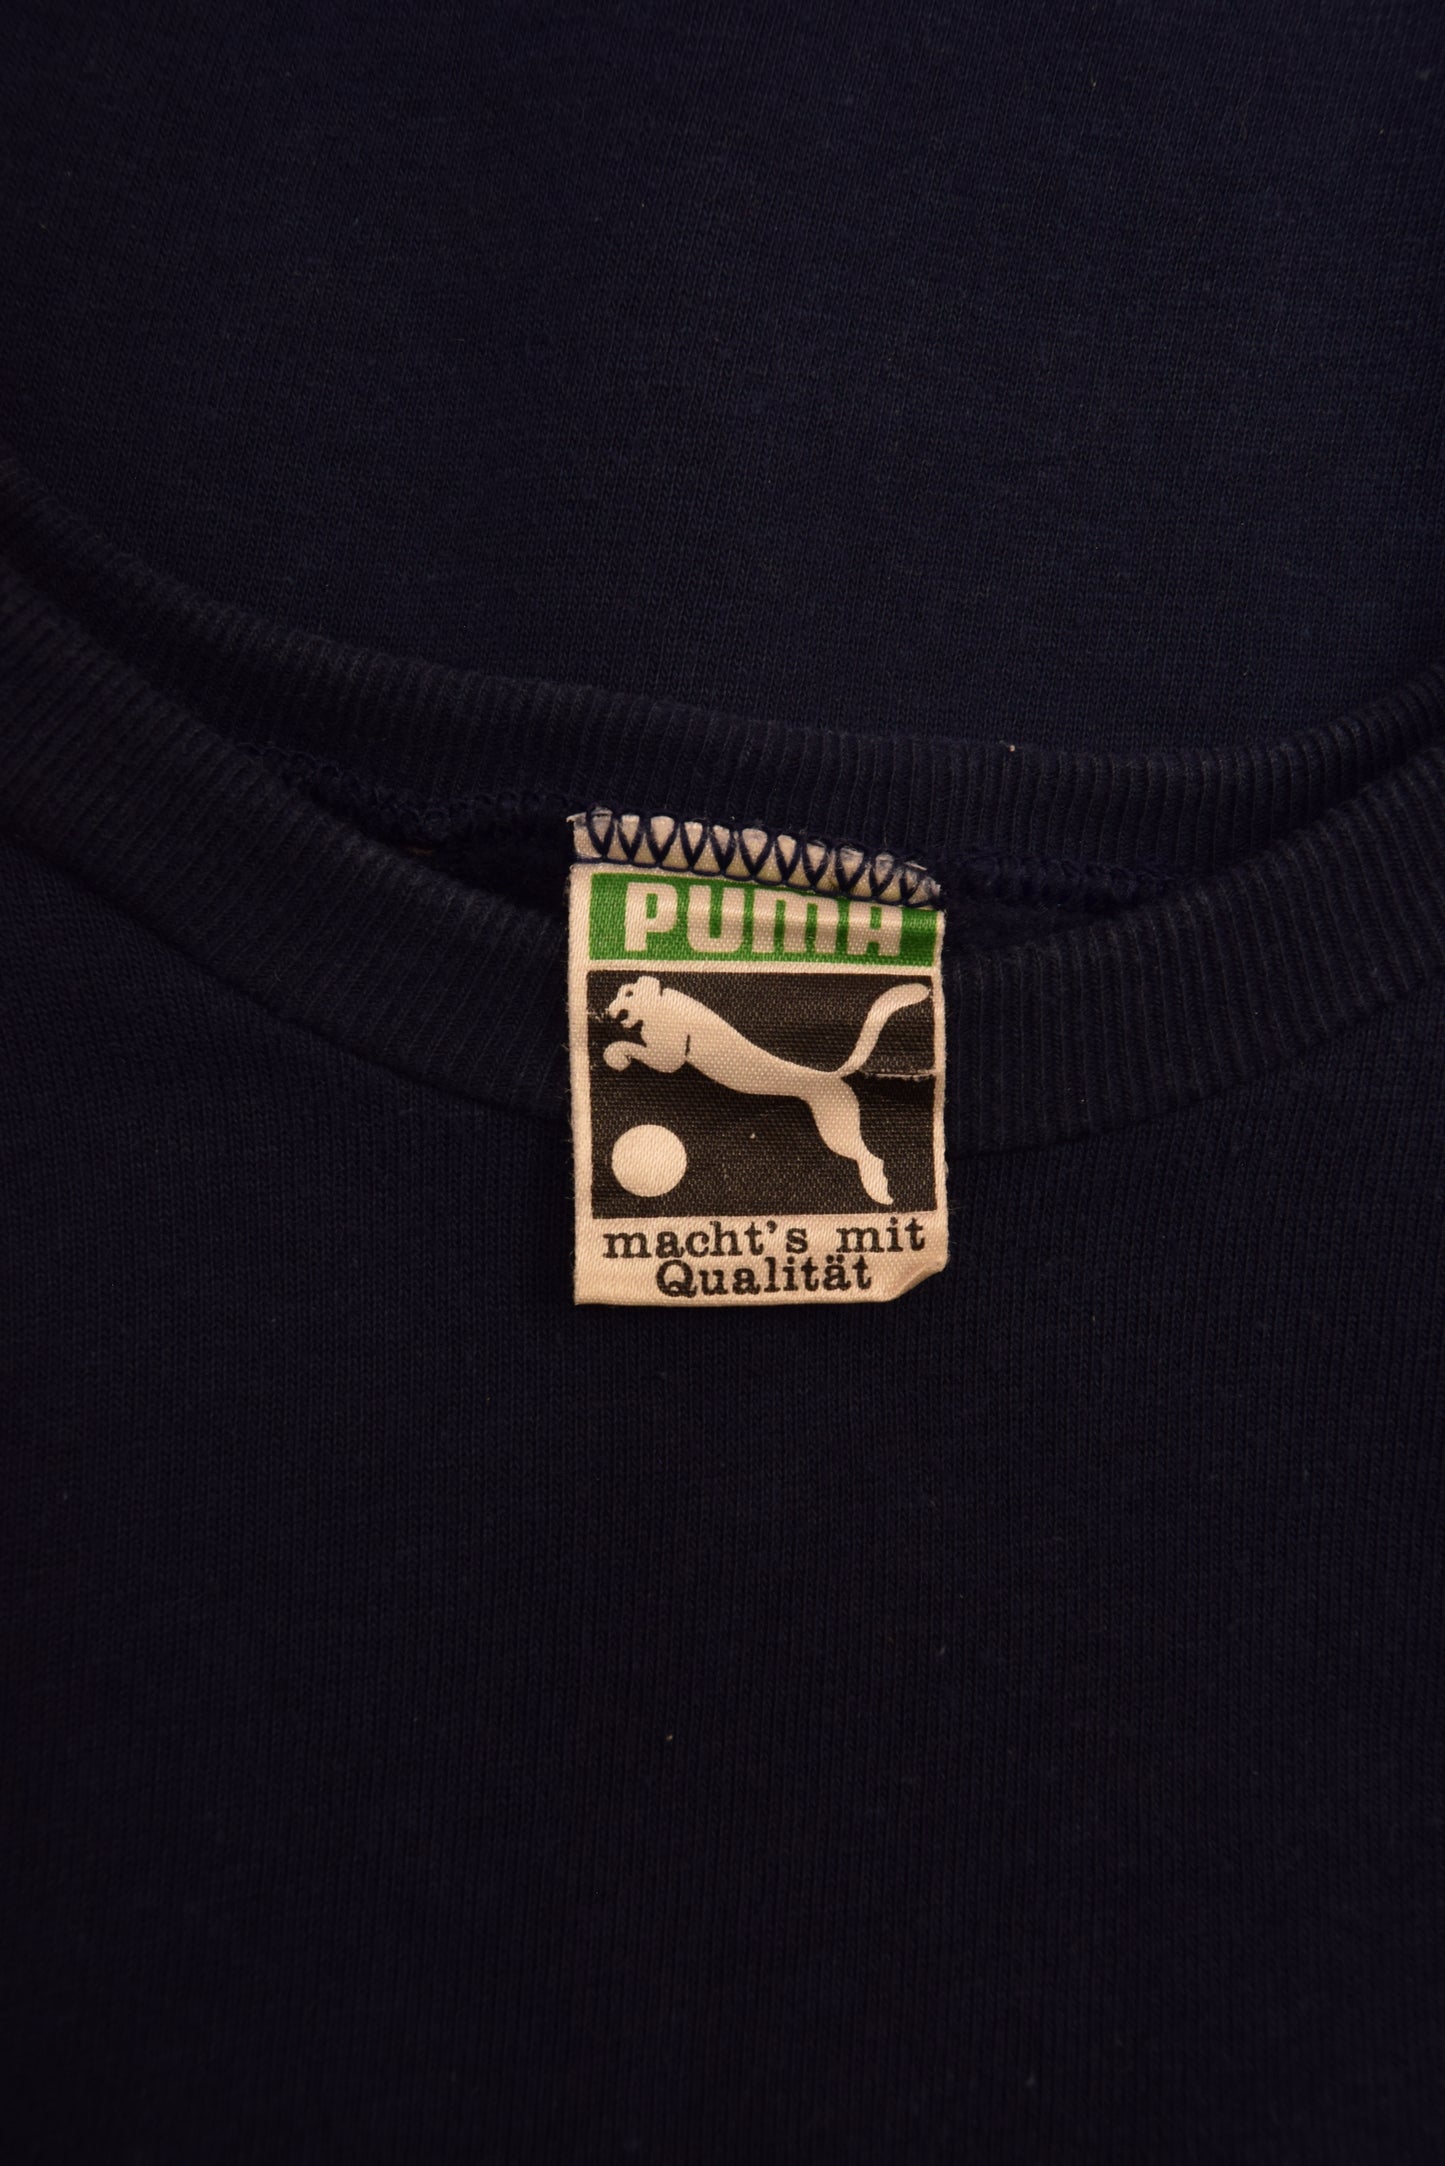 Vintage 80's Maradona Puma Sweatshirt Made in West Germany Blue